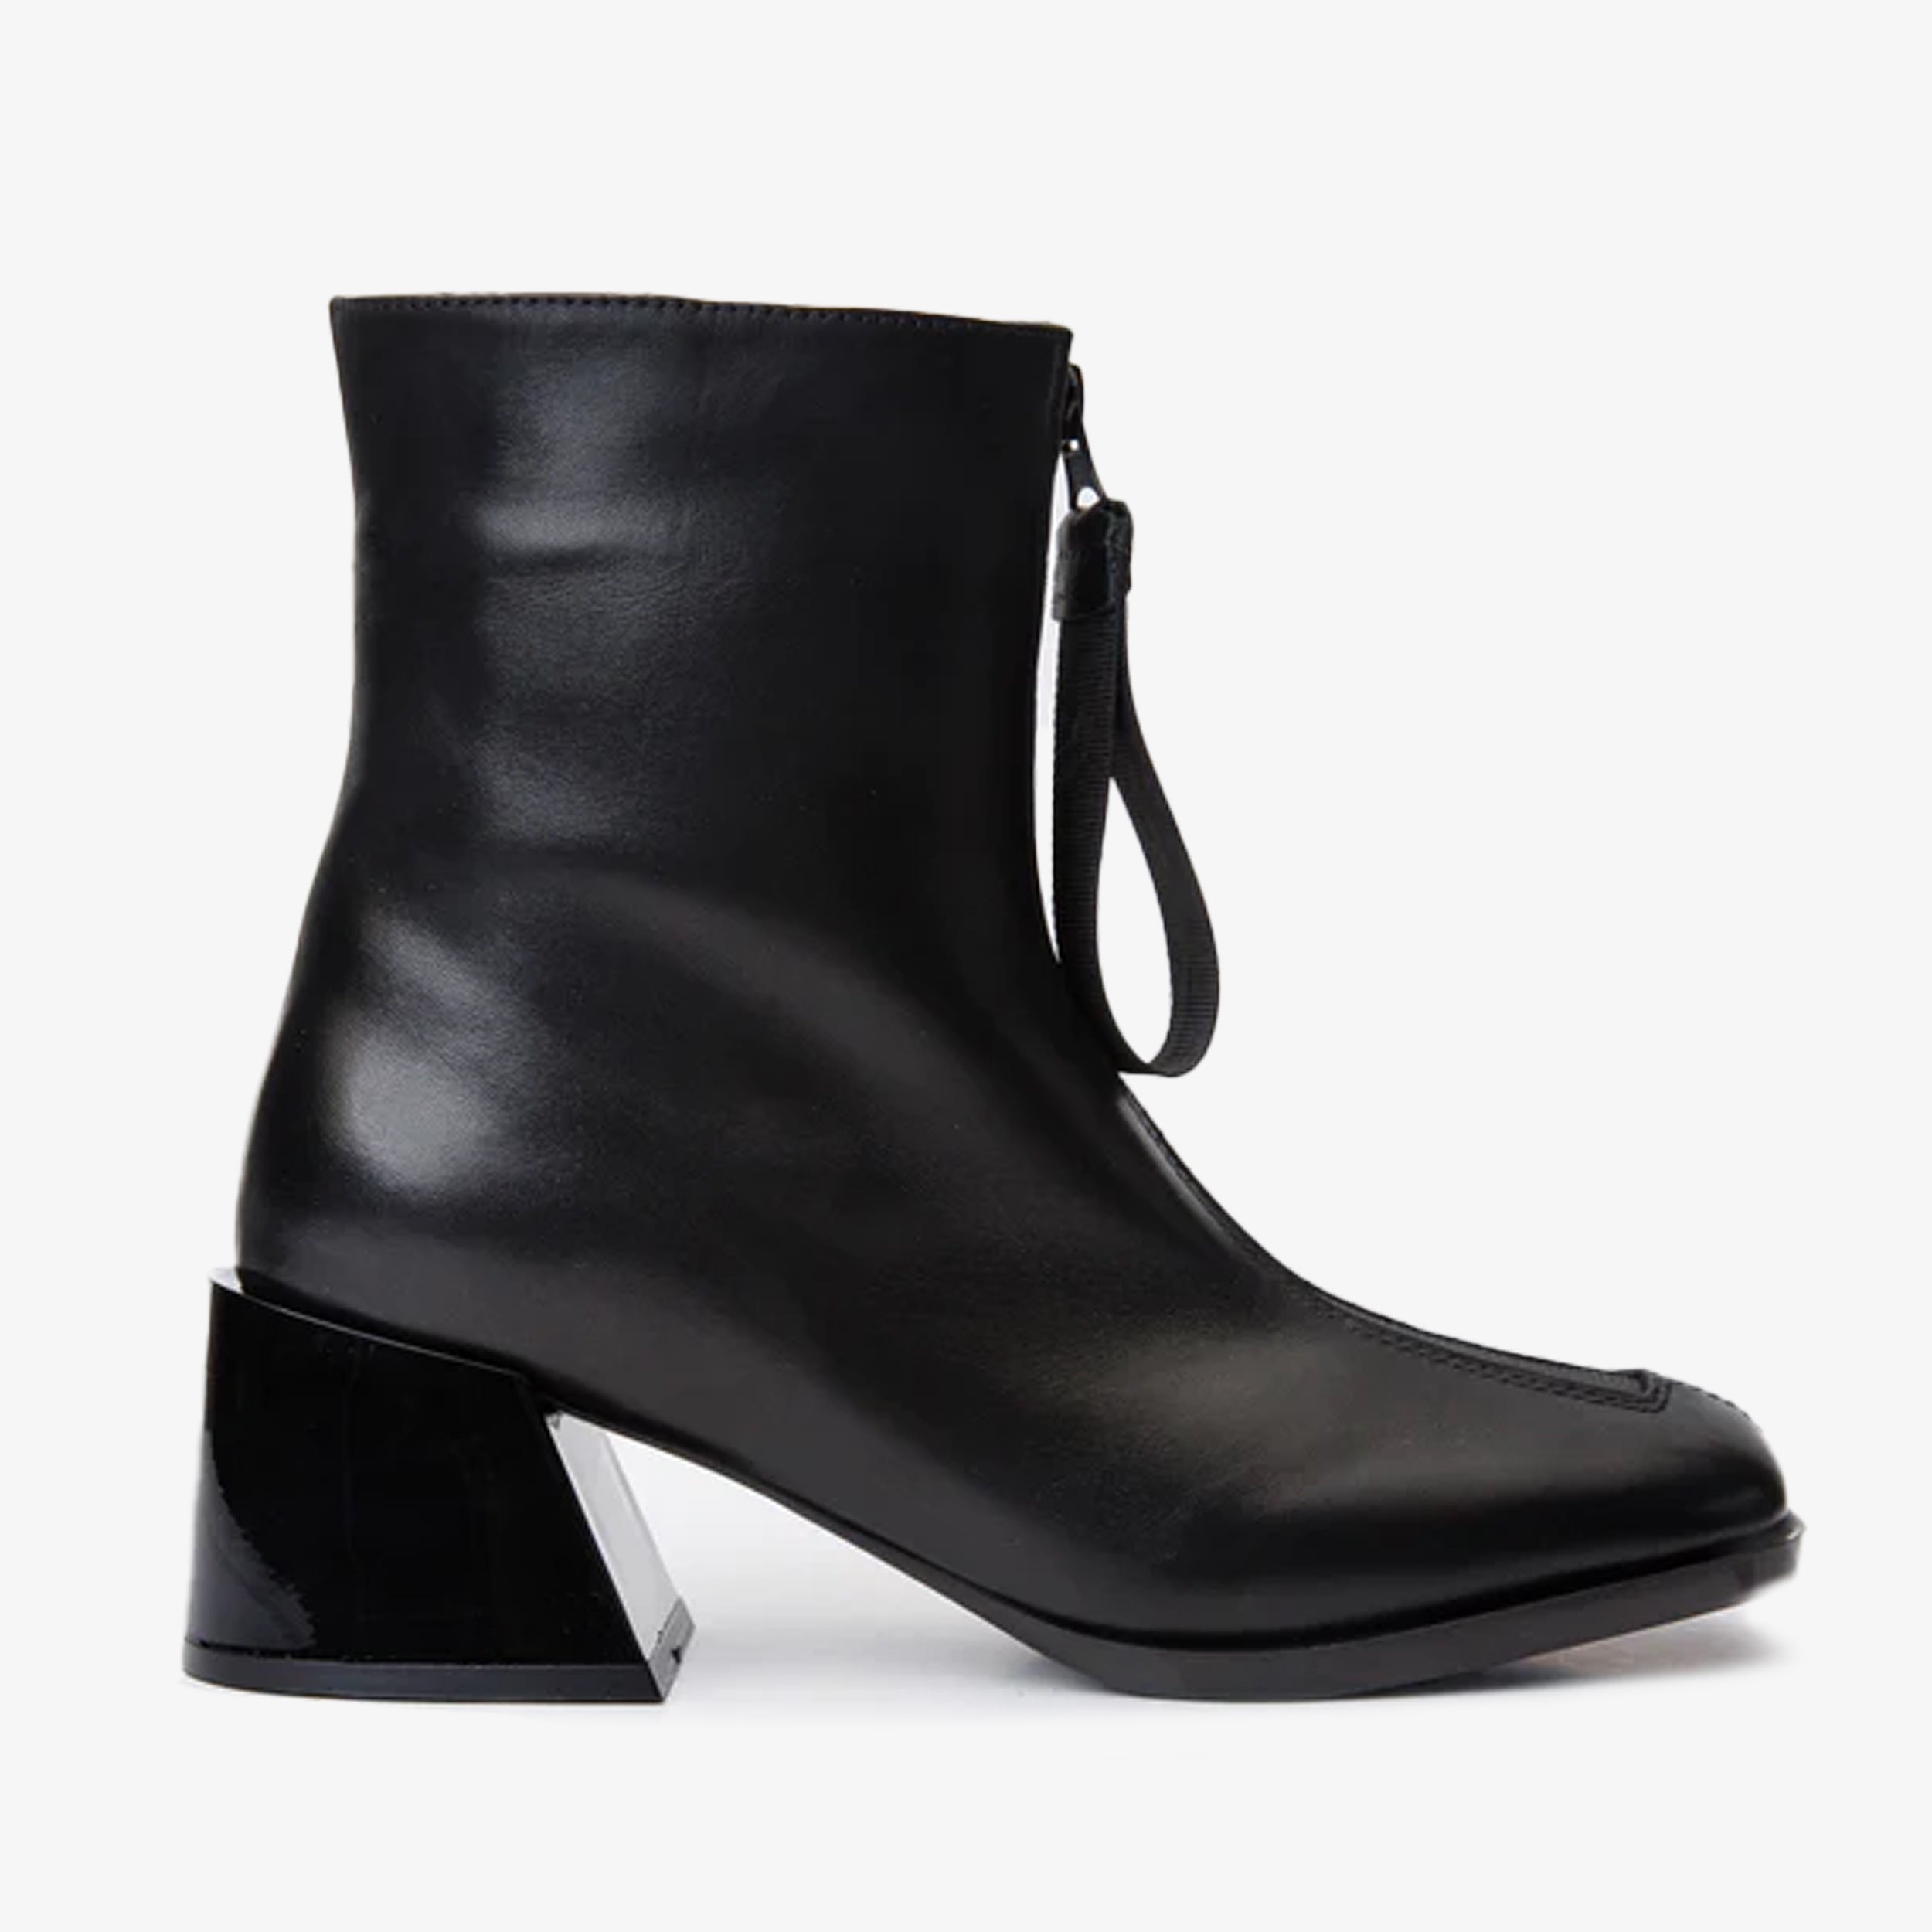 The Tackle Black Leather Block Heel Women Boot